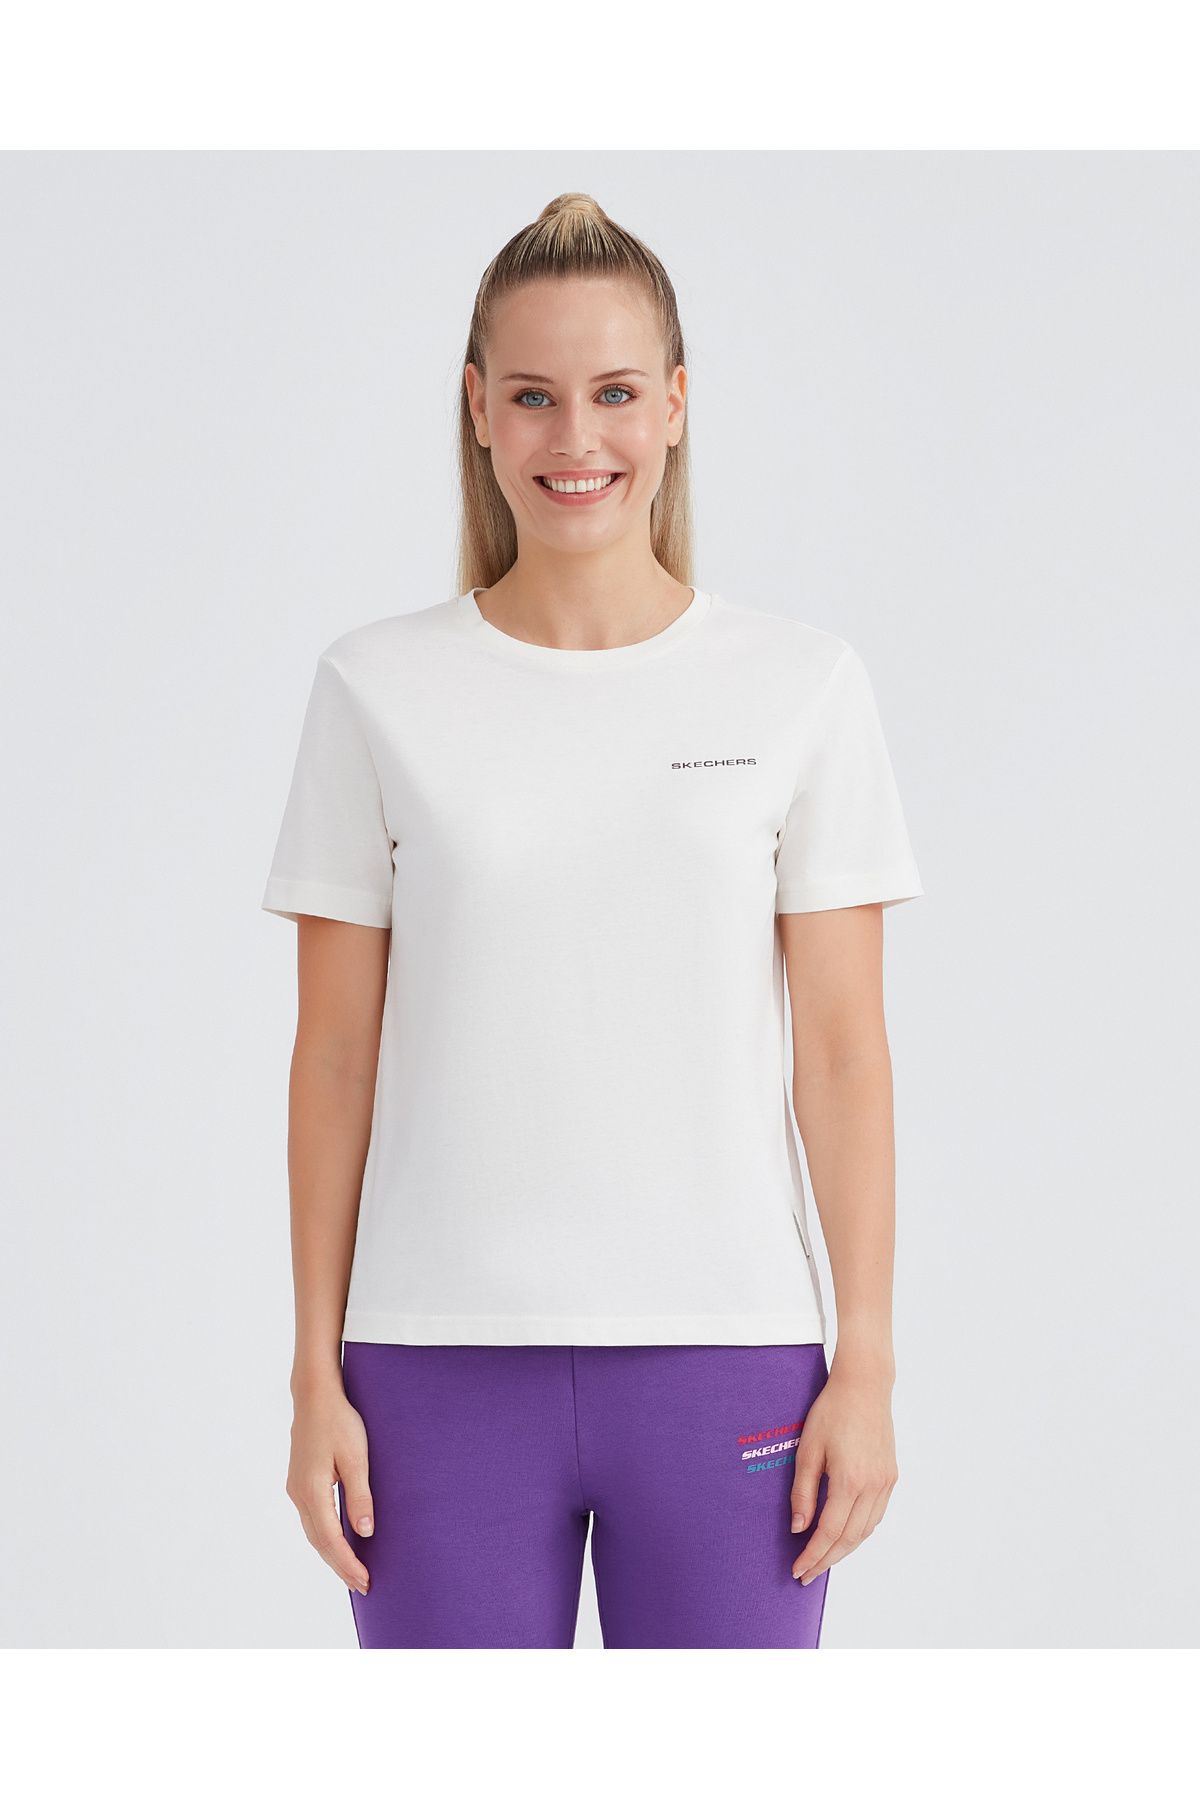 Skechers W New Basics Crew Neck T-shirt Kadın Beyaz Tshirt S212178-102